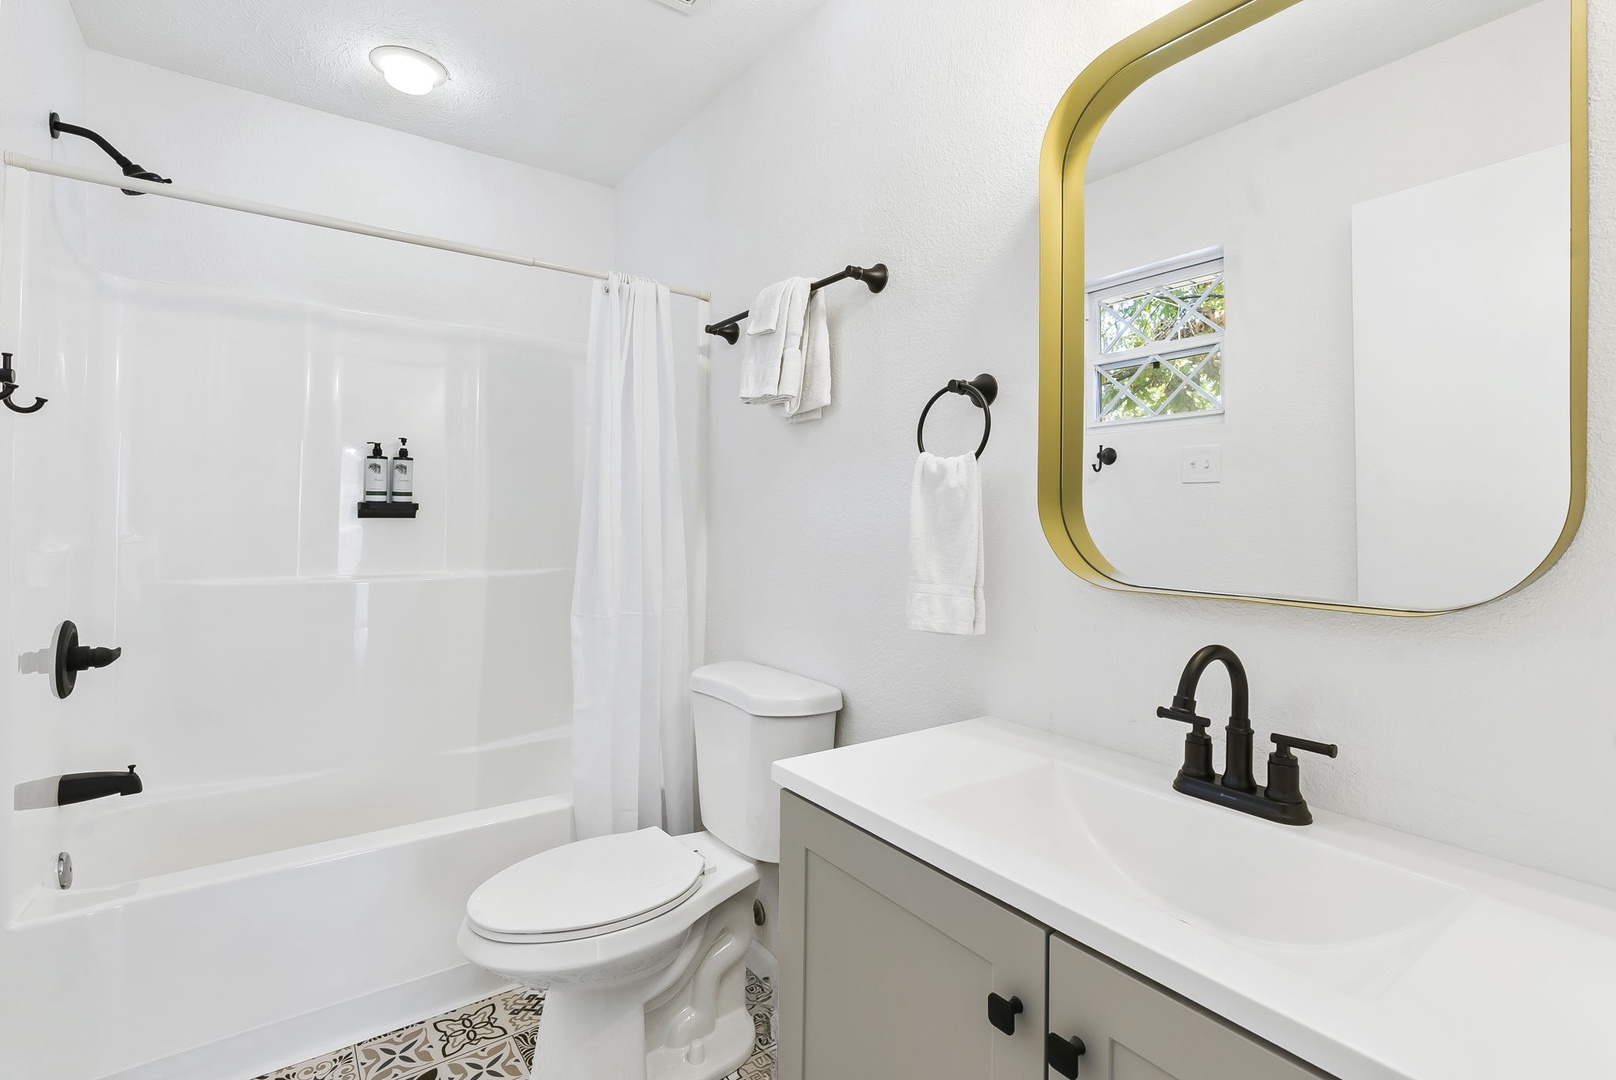 Unit 43: The 2nd floor king en suite offers a single vanity & shower/tub combo